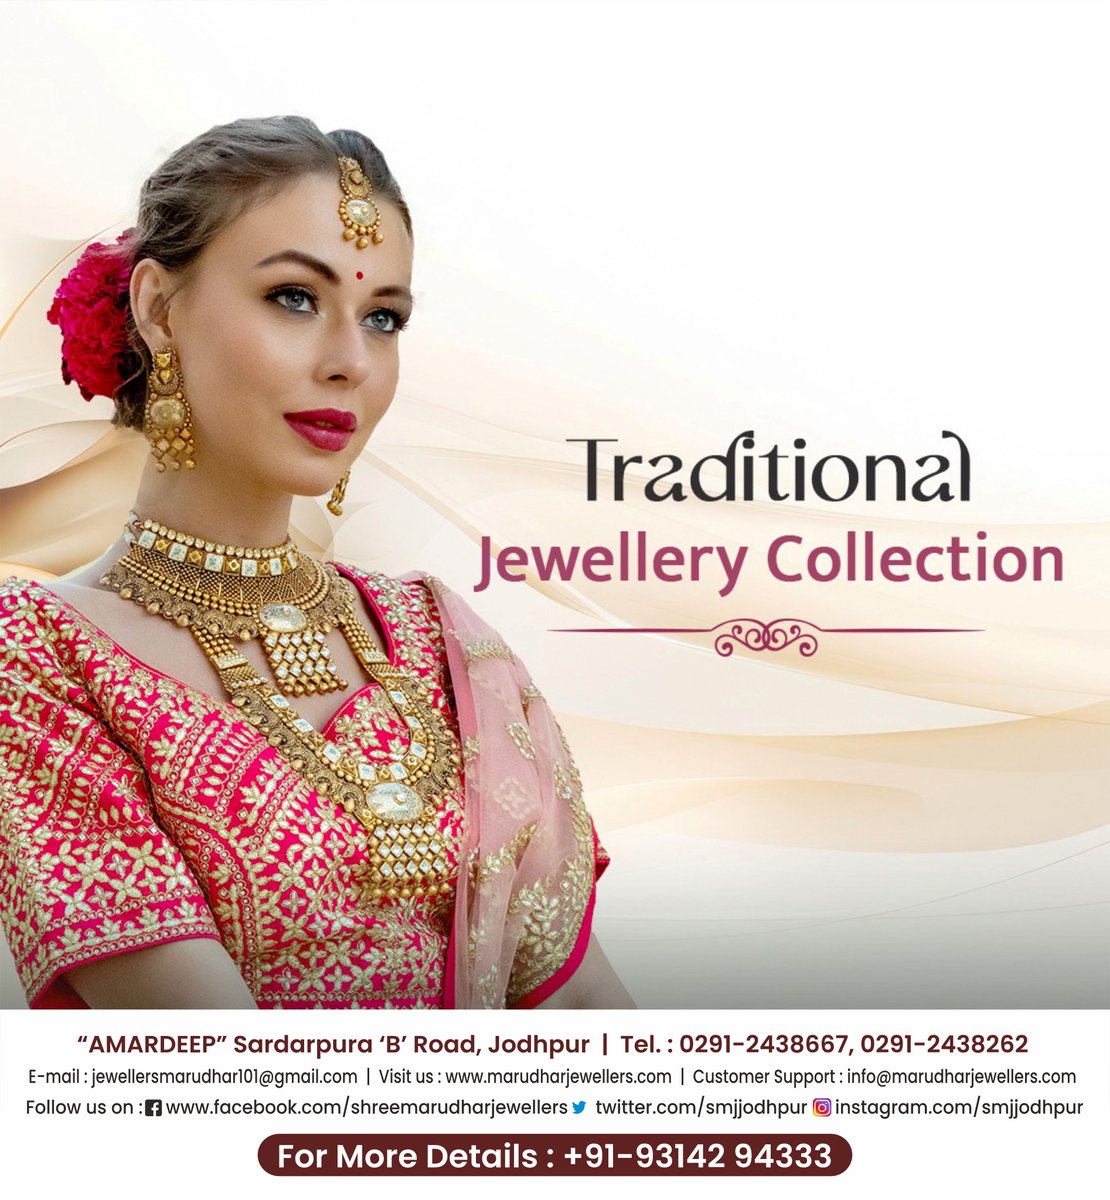 Shree Marudhar Jewellers.
Amardeep Comlex, B Road, Sardarpura Jodhpur.
Cell : 9314294333 Tel. N. :- 0291-2438667, 2438262
Website : marudharjewellers.com
#dimonds, #Goldern #Jewellery #Jodhpur #Rajasthan, #traditional_jewllery #jewelry
#jewelrydesign #jewelrylover